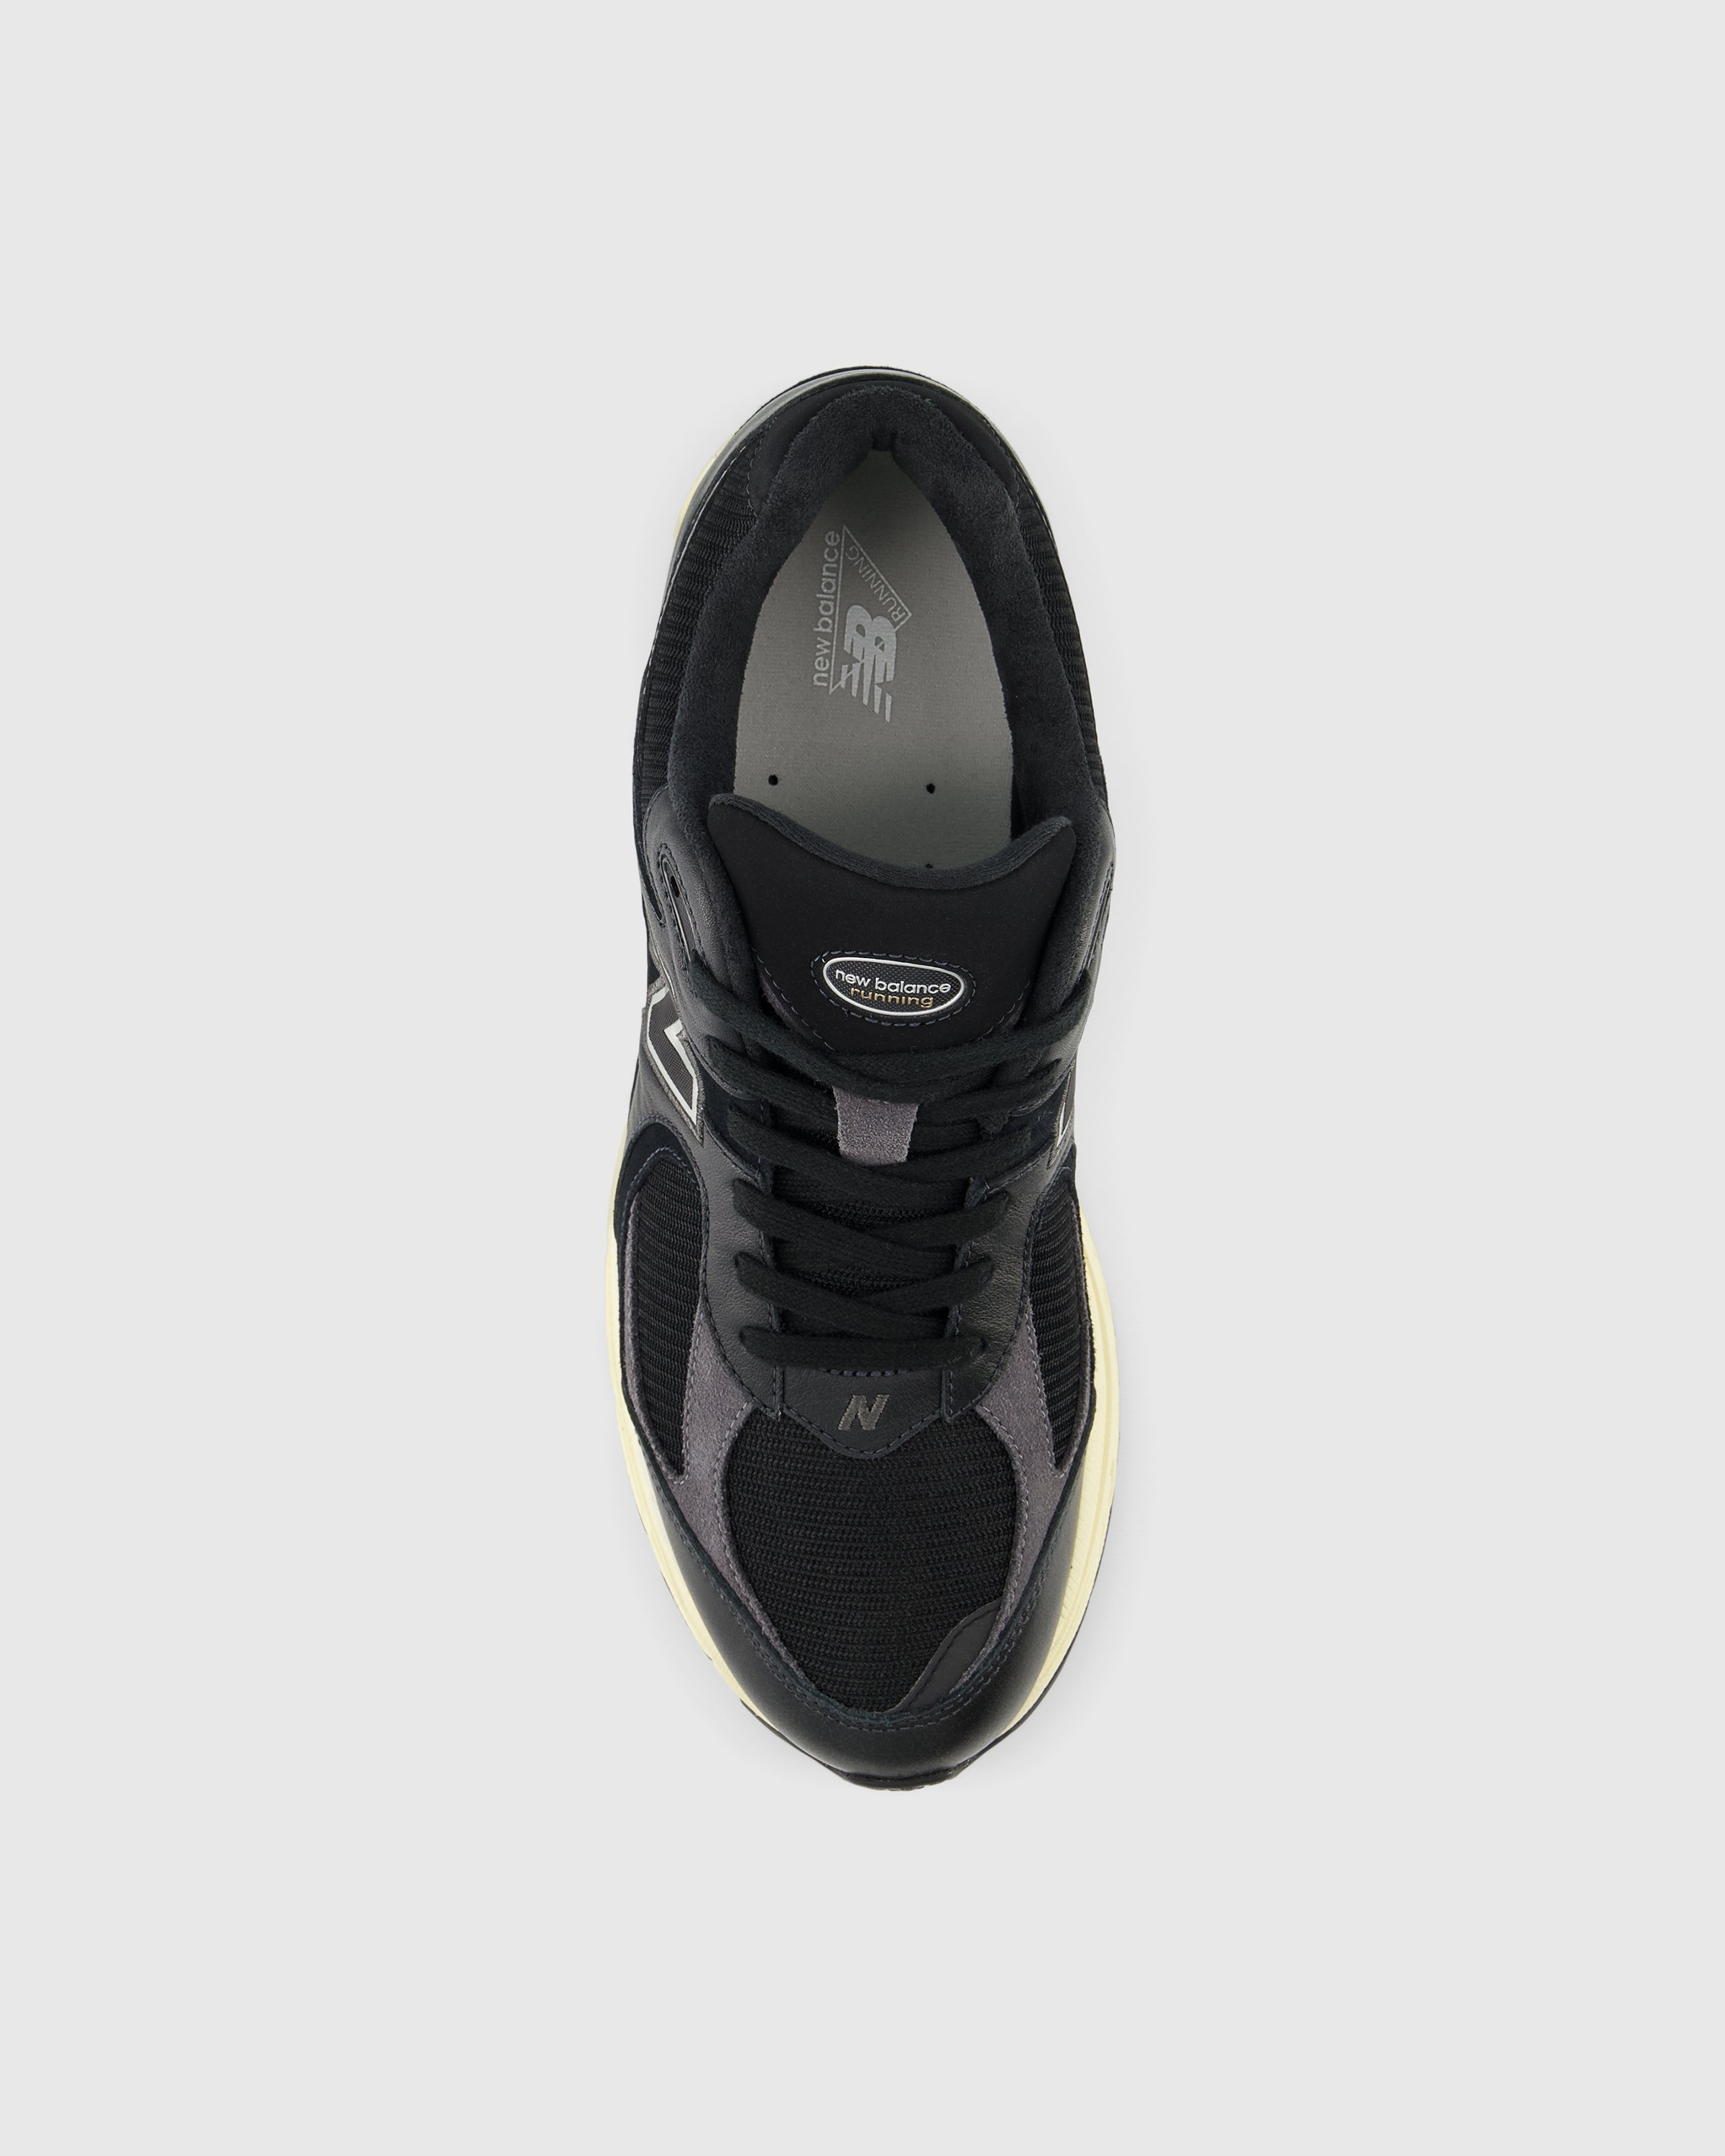 New Balance - M2002RIB BLACK - Footwear - Black - Image 5